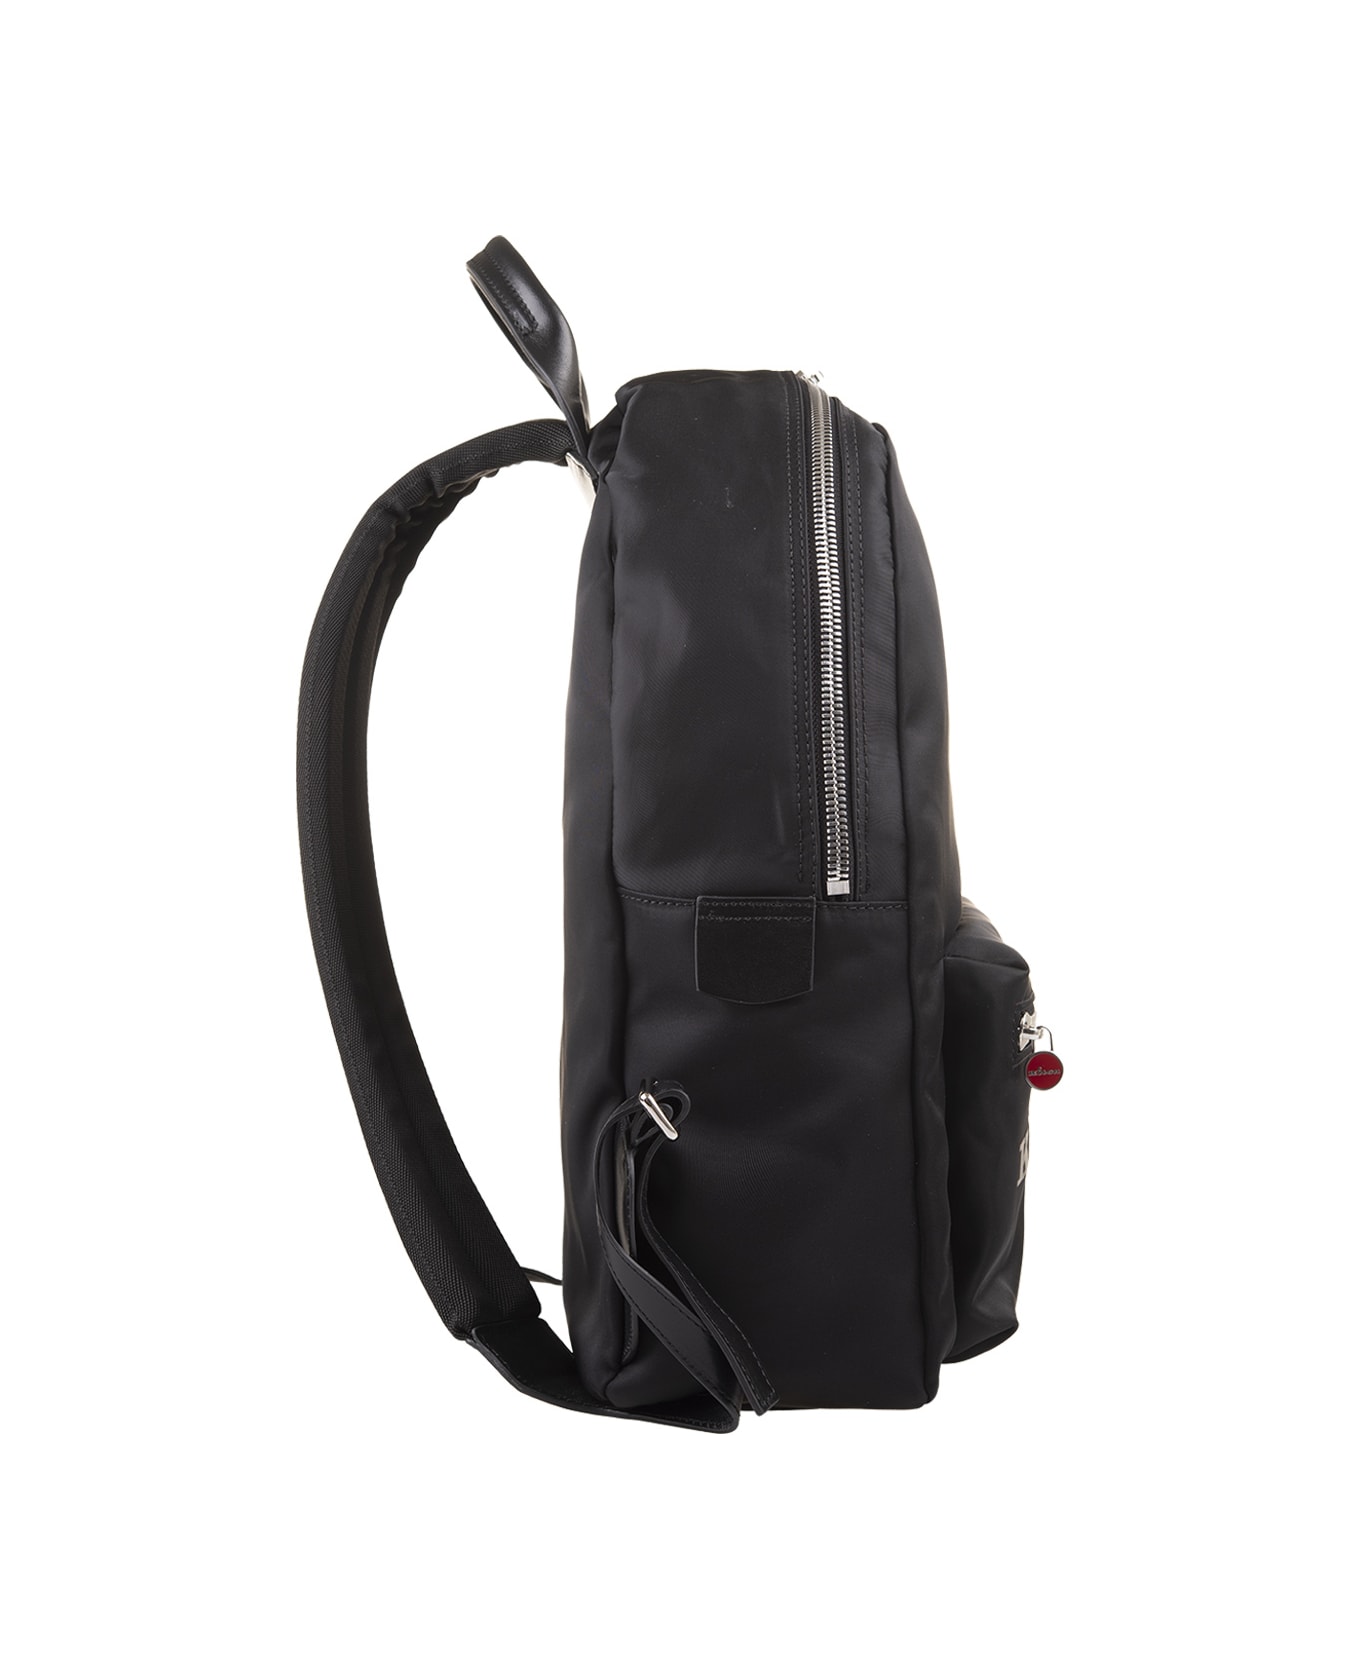 Kiton Black Nylon Backpack With Logo - Black バックパック